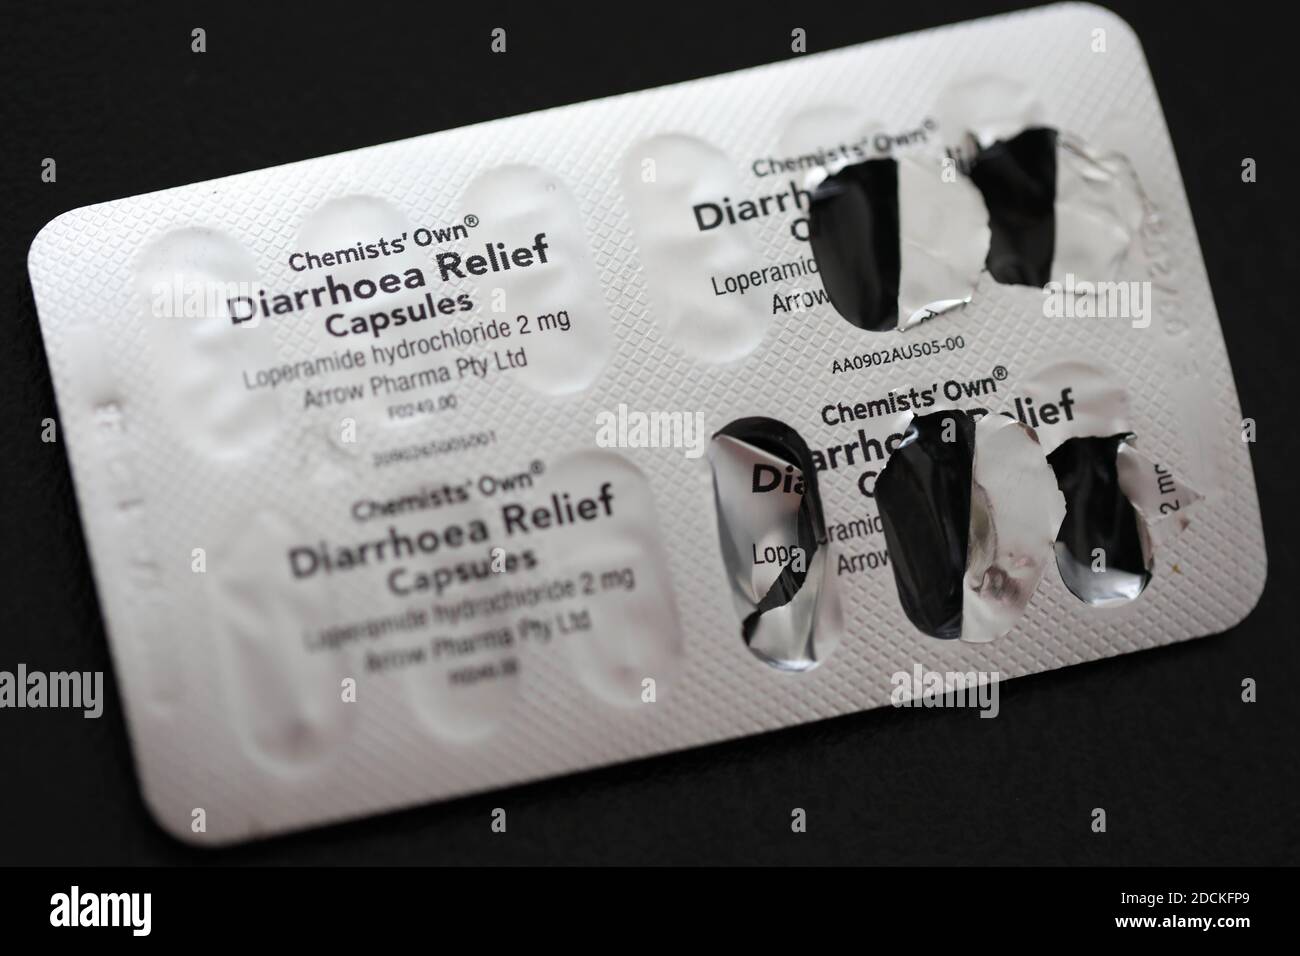 Diarrhoea Relief Capsules Stock Photo